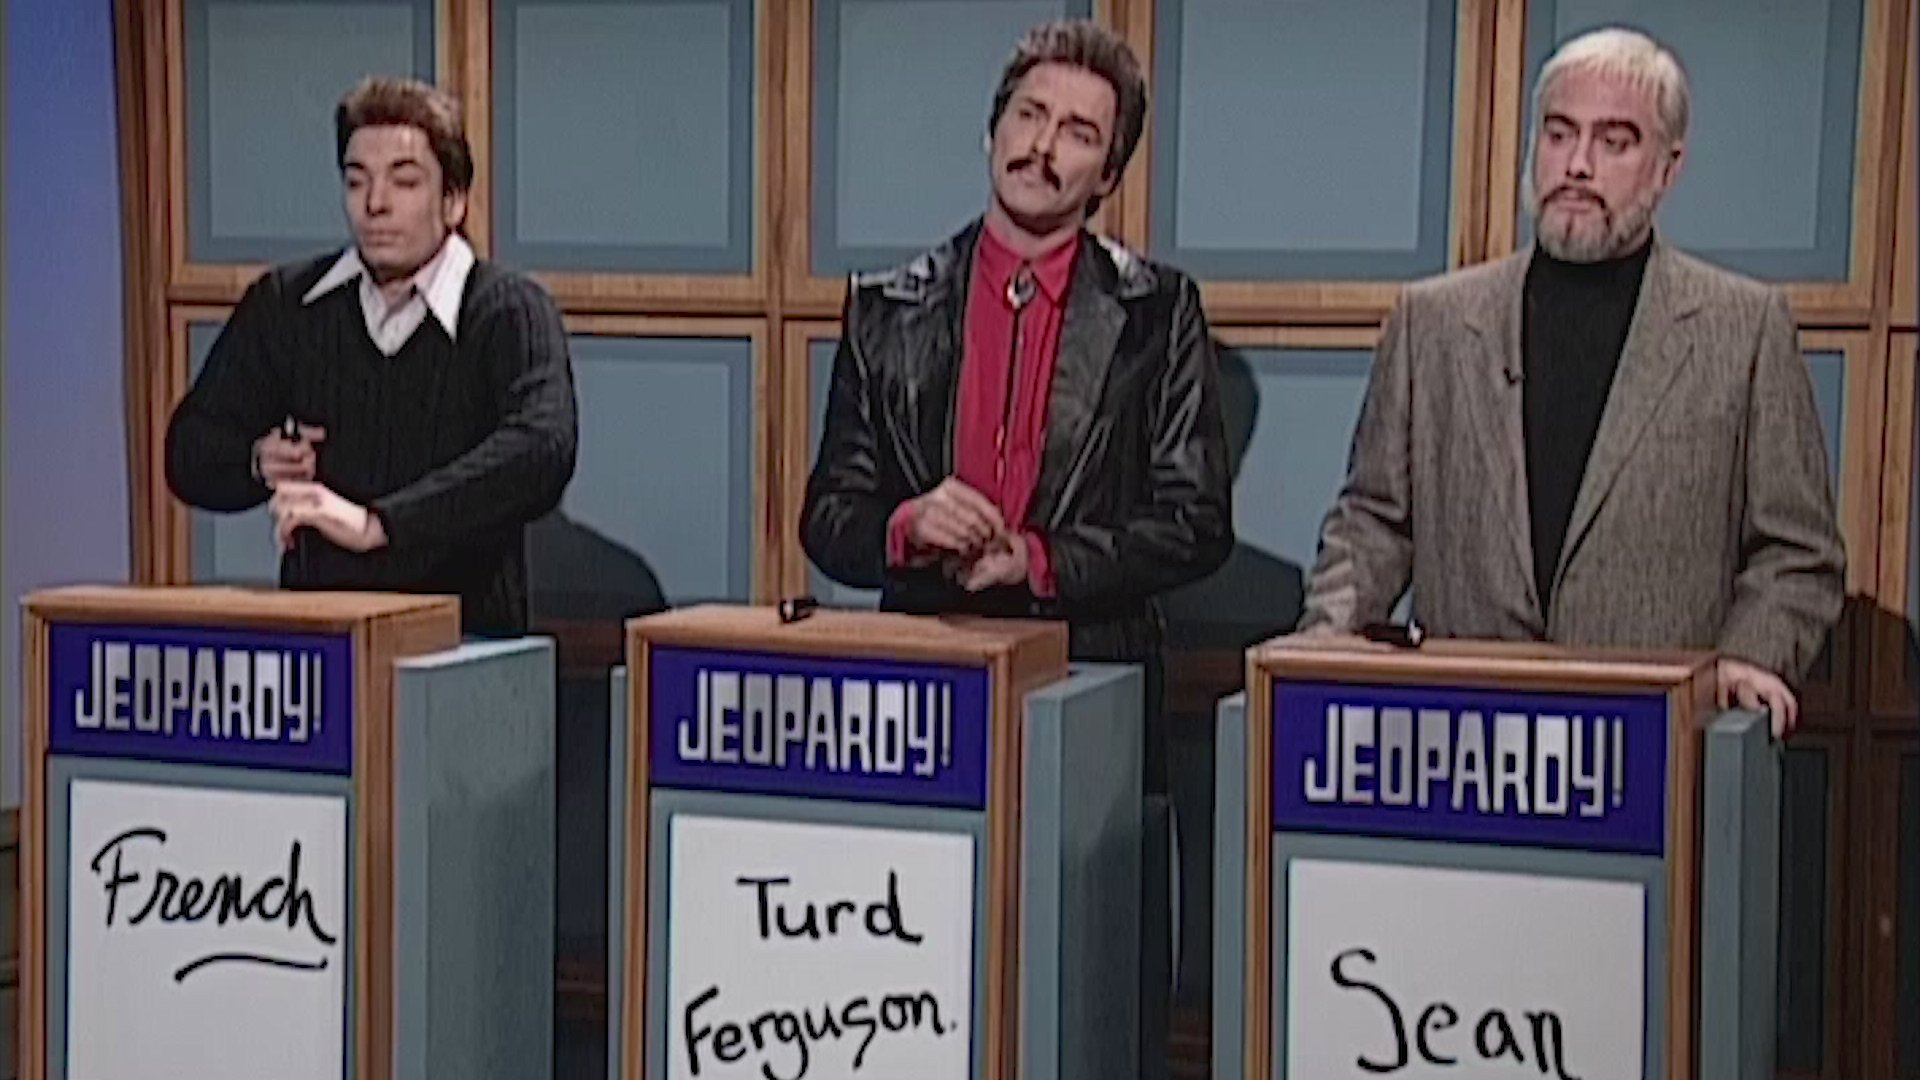 Watch Saturday Night Live Highlight: Celebrity Jeopardy - NBC.com